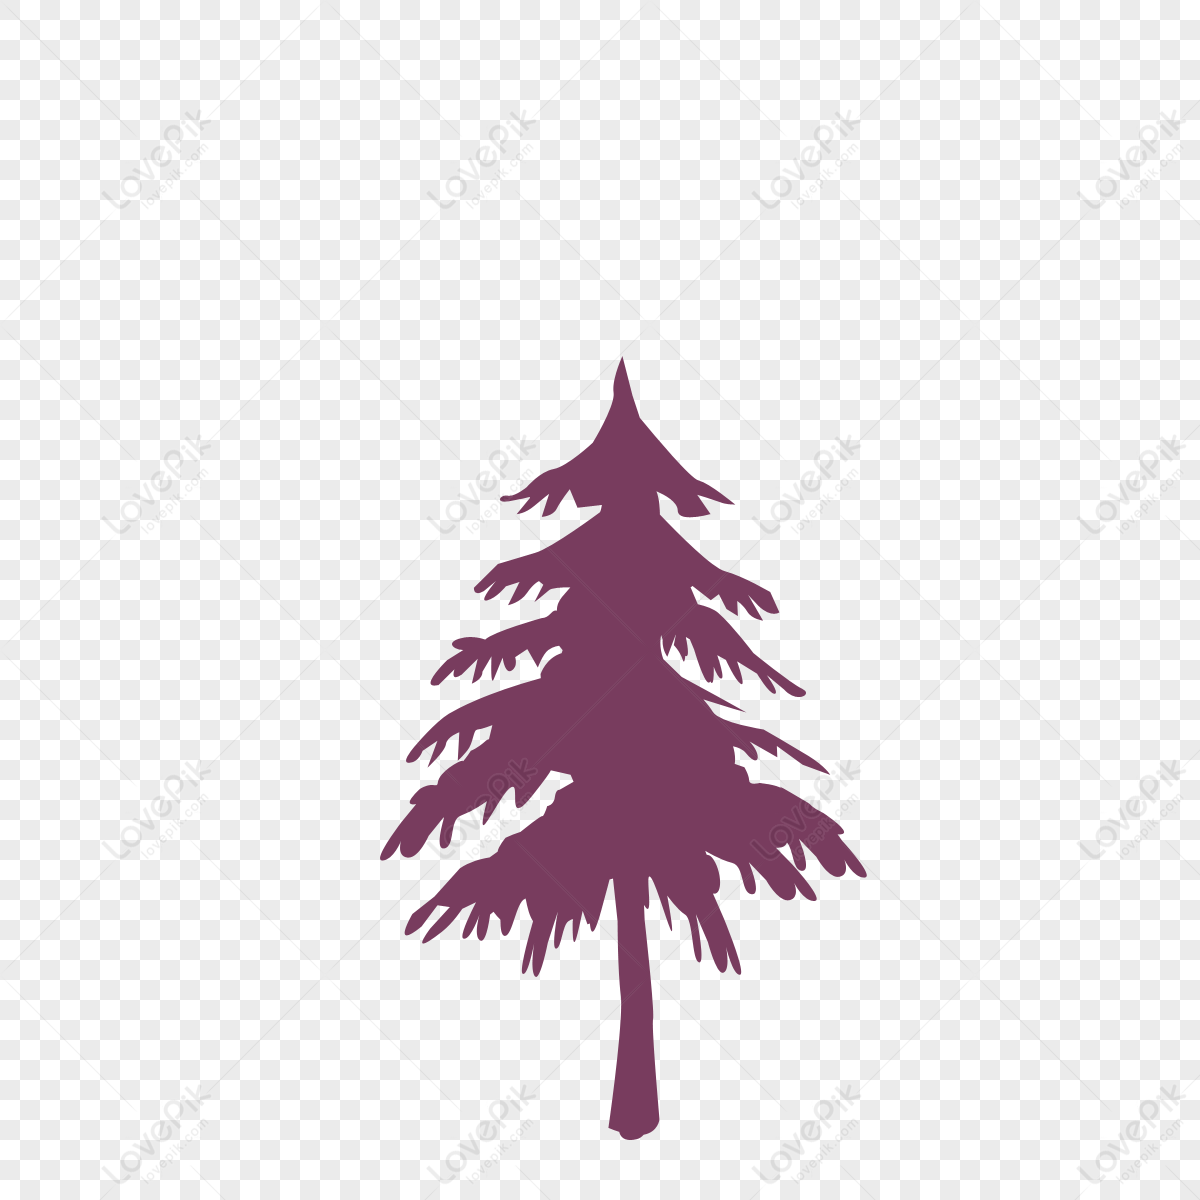 Pine tree silhouette, tree vector, light tree, purple tree png white transparent